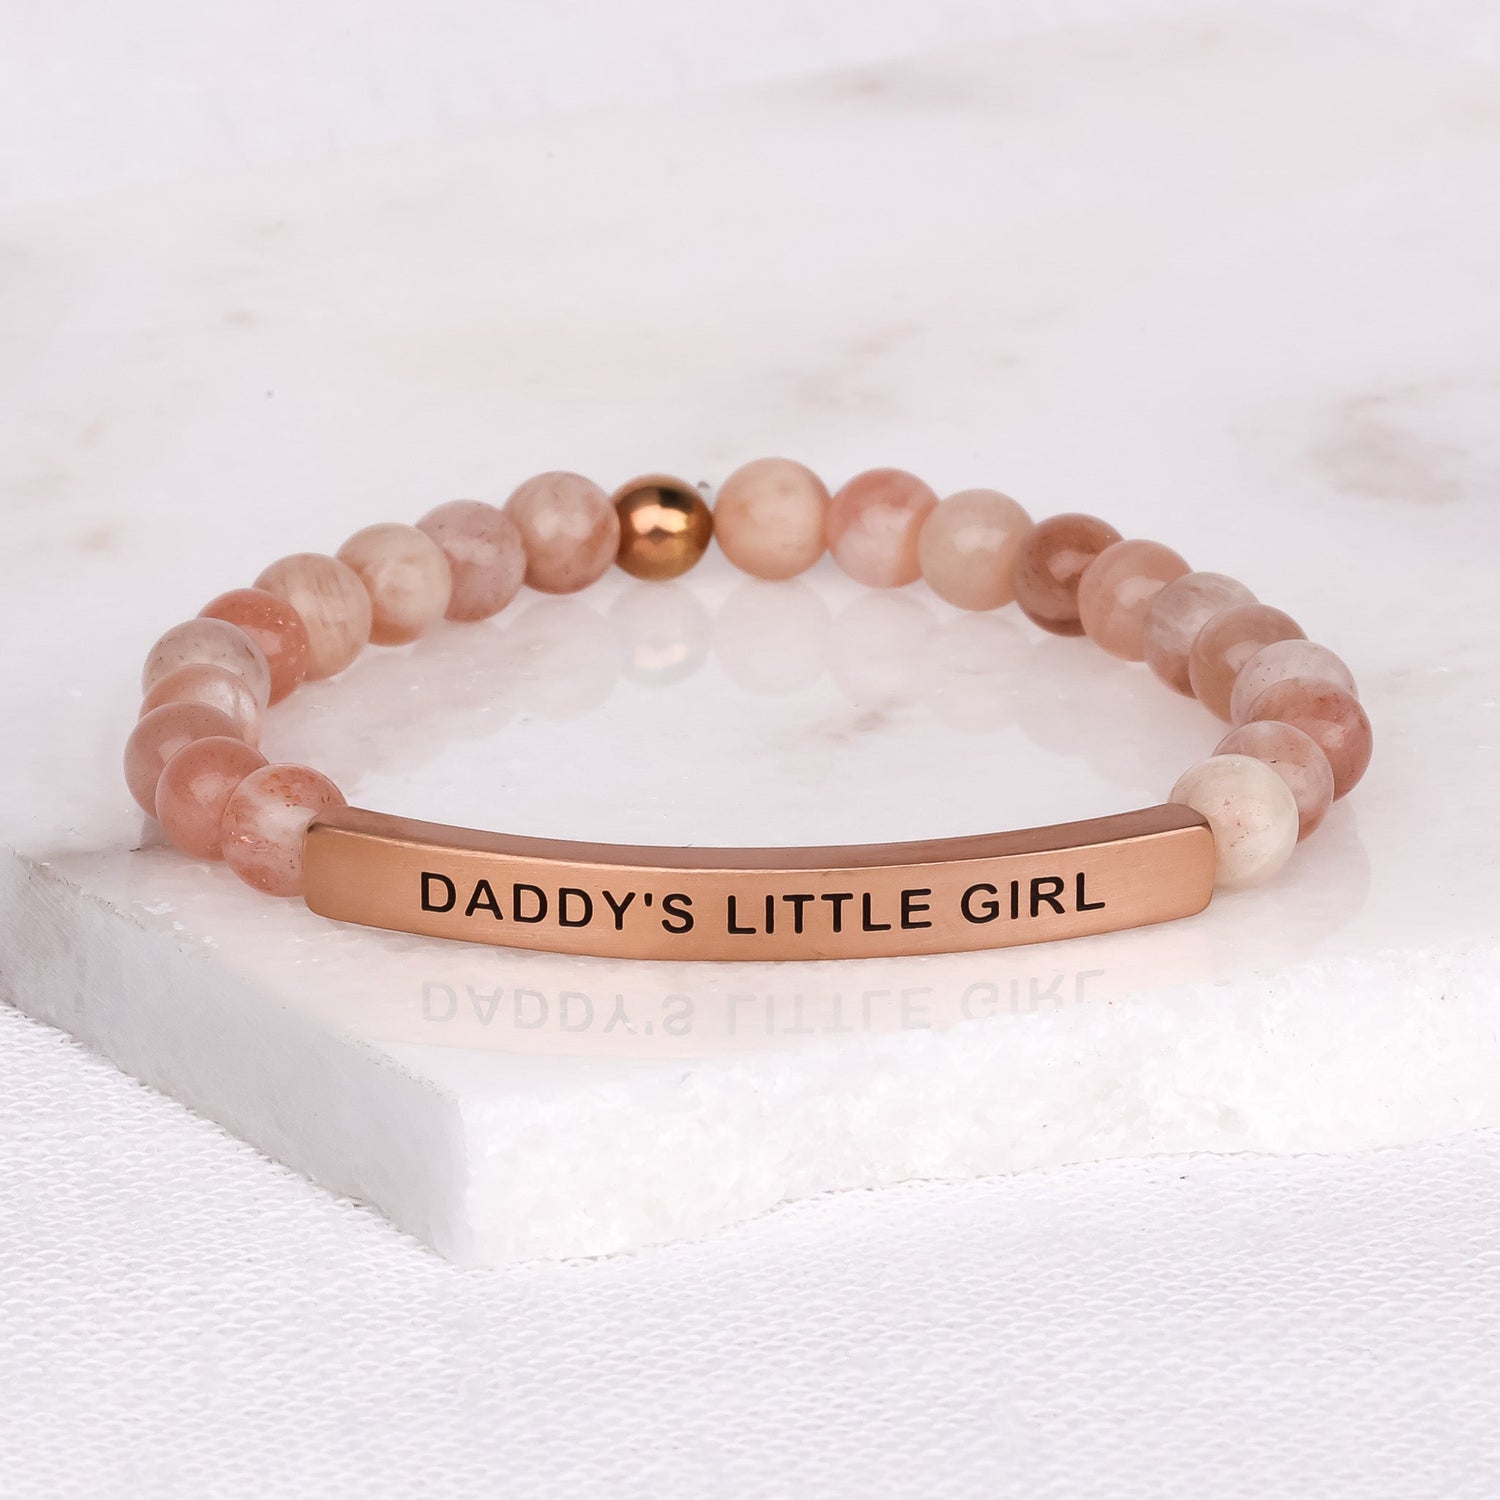 Inspire Me Bracelets - Daddy's Little Girl-Inspirational Bead Bracelet Sunstone / Medium (7.1in - 8in) Average Man Size